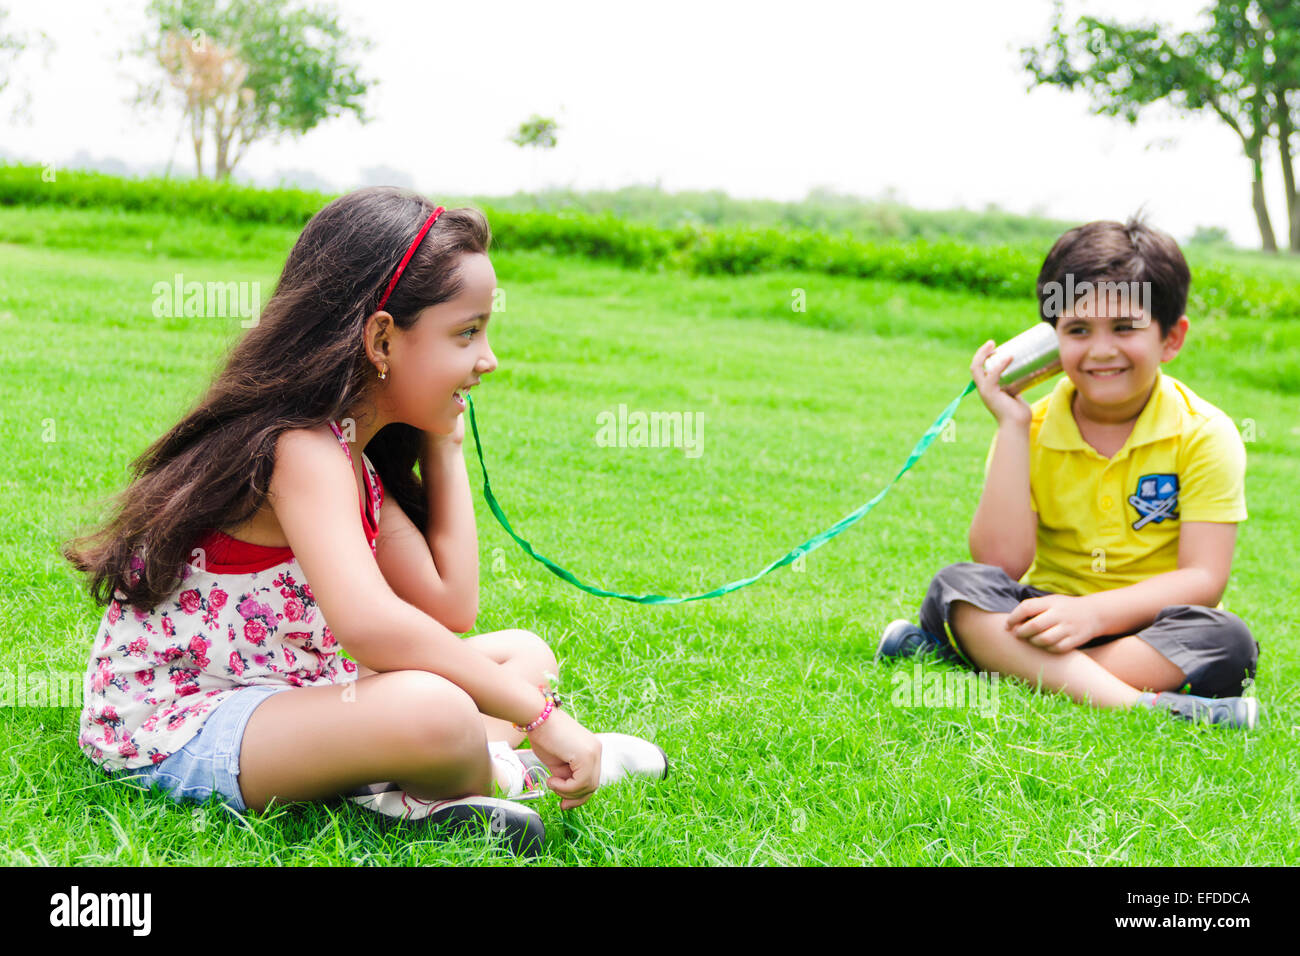 2 indian children friend park toy phone talking Stock Photo